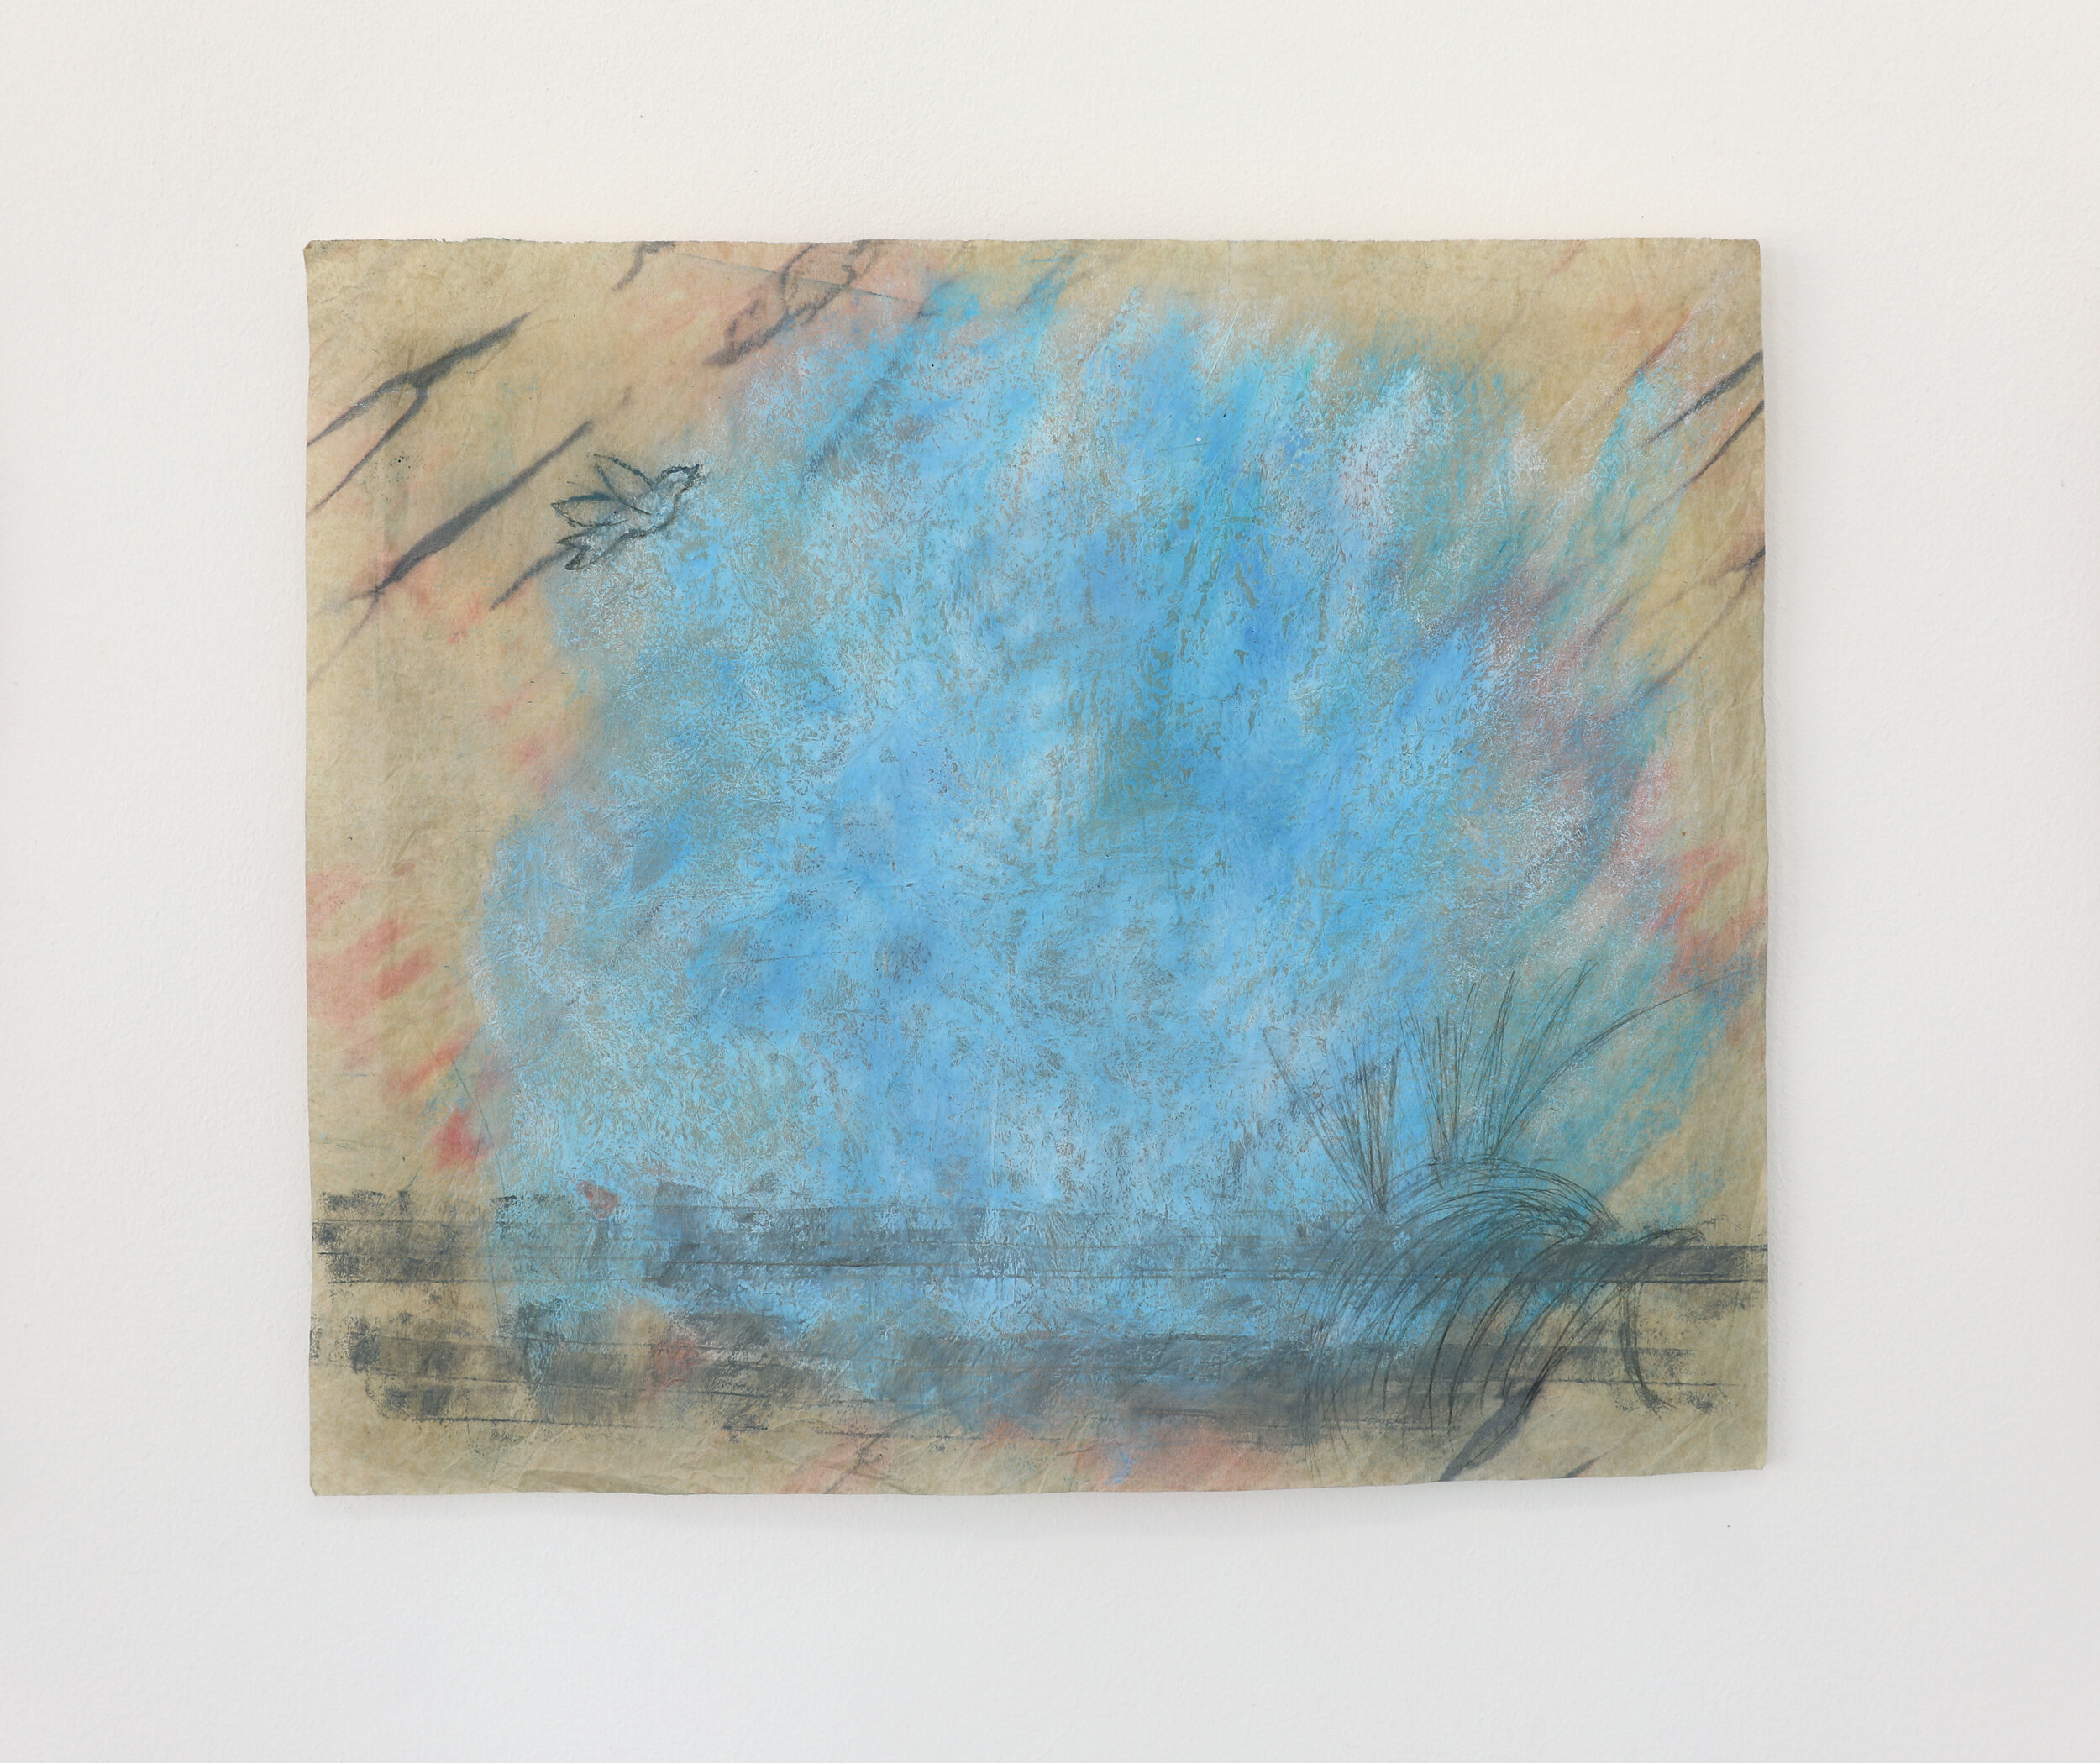   “L’envol I”, (« Taking flight I») , 2020, oil pastel and pencil on found paper, 39x33cm 